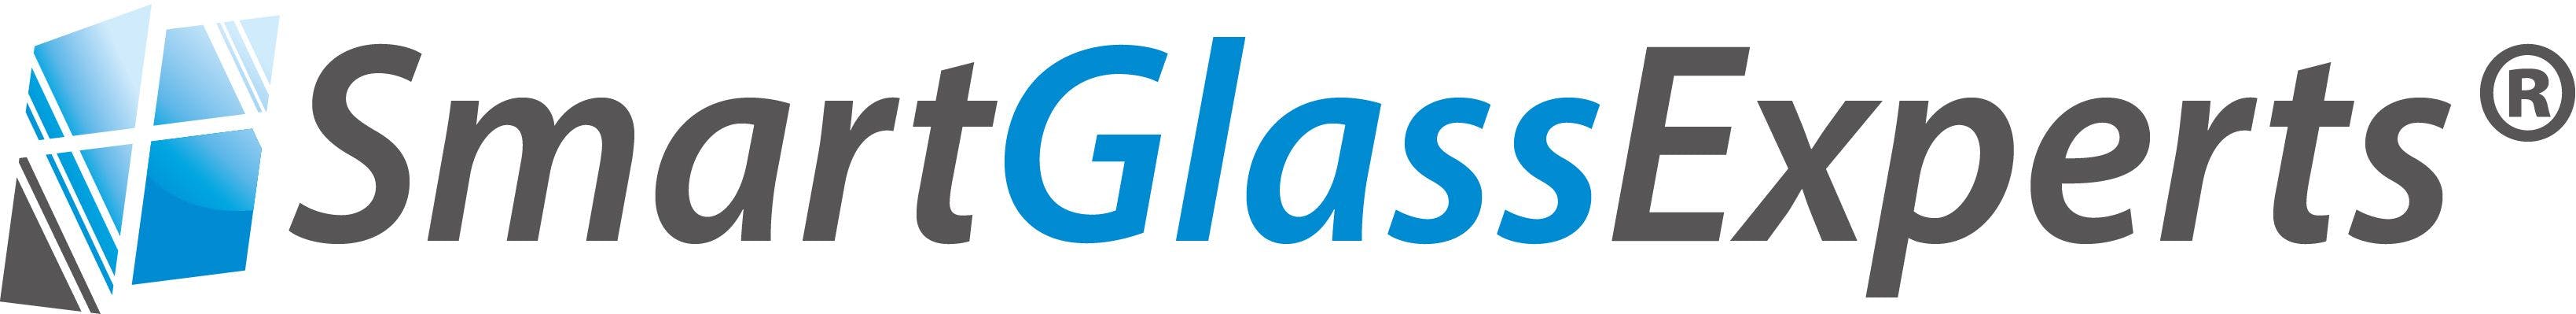 SmartGlassGroup Teaser Logo